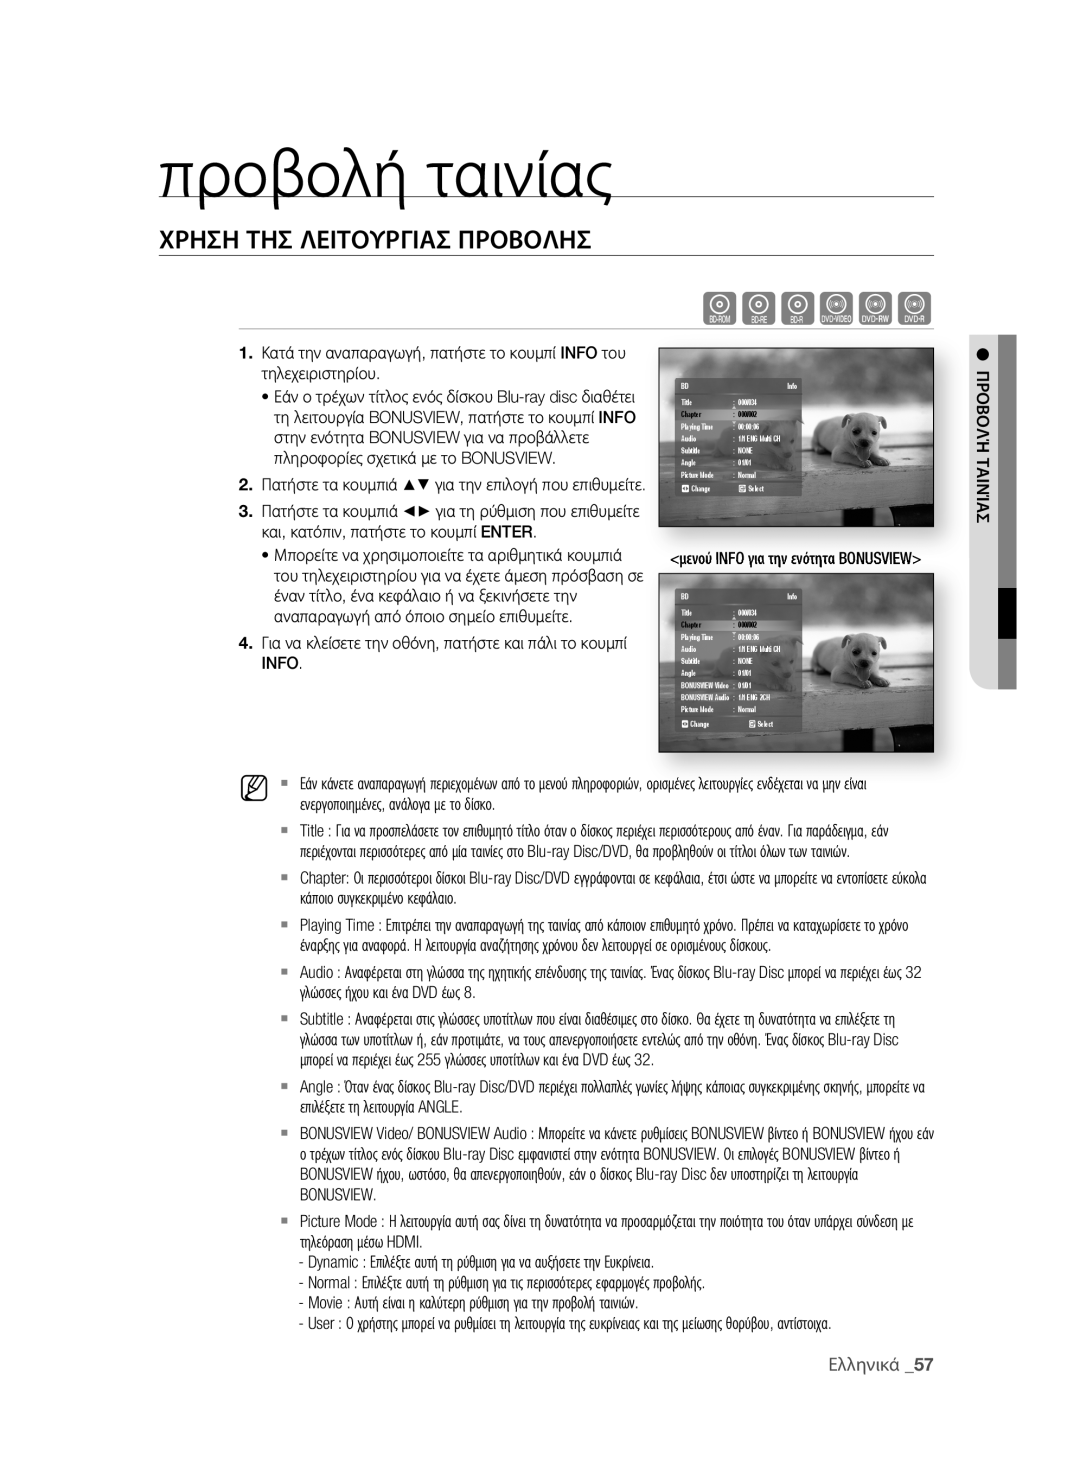 Samsung BD-P1580/EDC manual προβολή ταινίας, hgfZCV, Χρηση Τησ ΛειΤοΥρΓιΑσ ΠροβοΛησ, Ελληνικά  